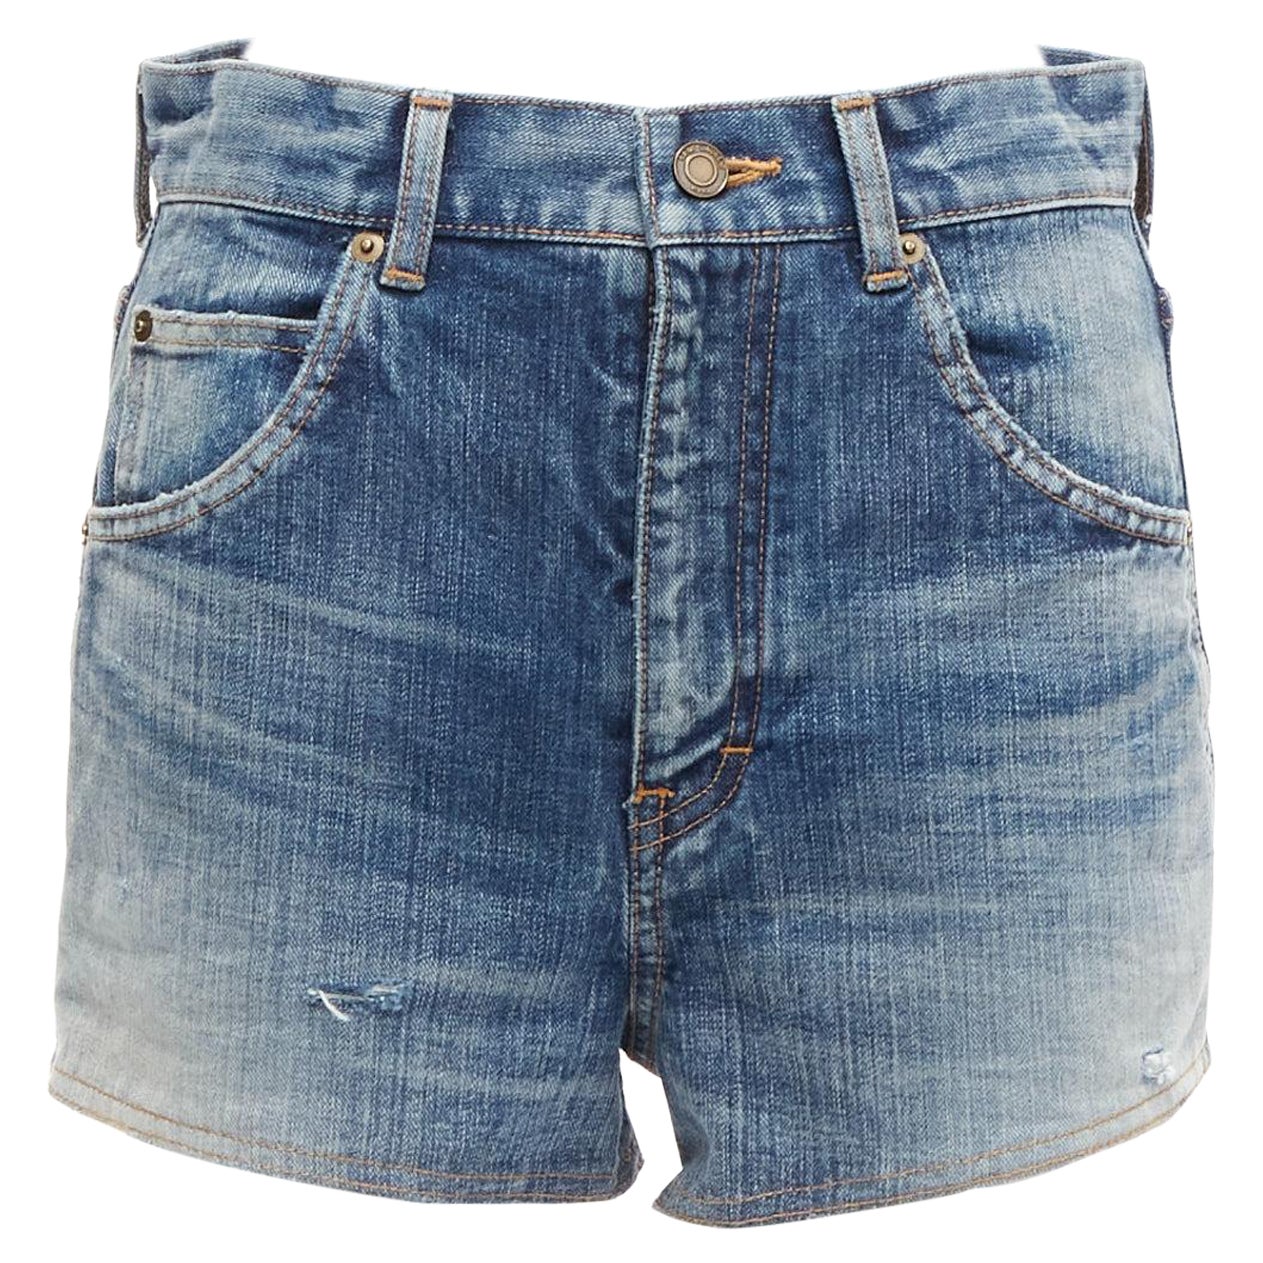 SAINT LAURENT 2020 blue distressed washed denim high waisted shorts 29" For Sale